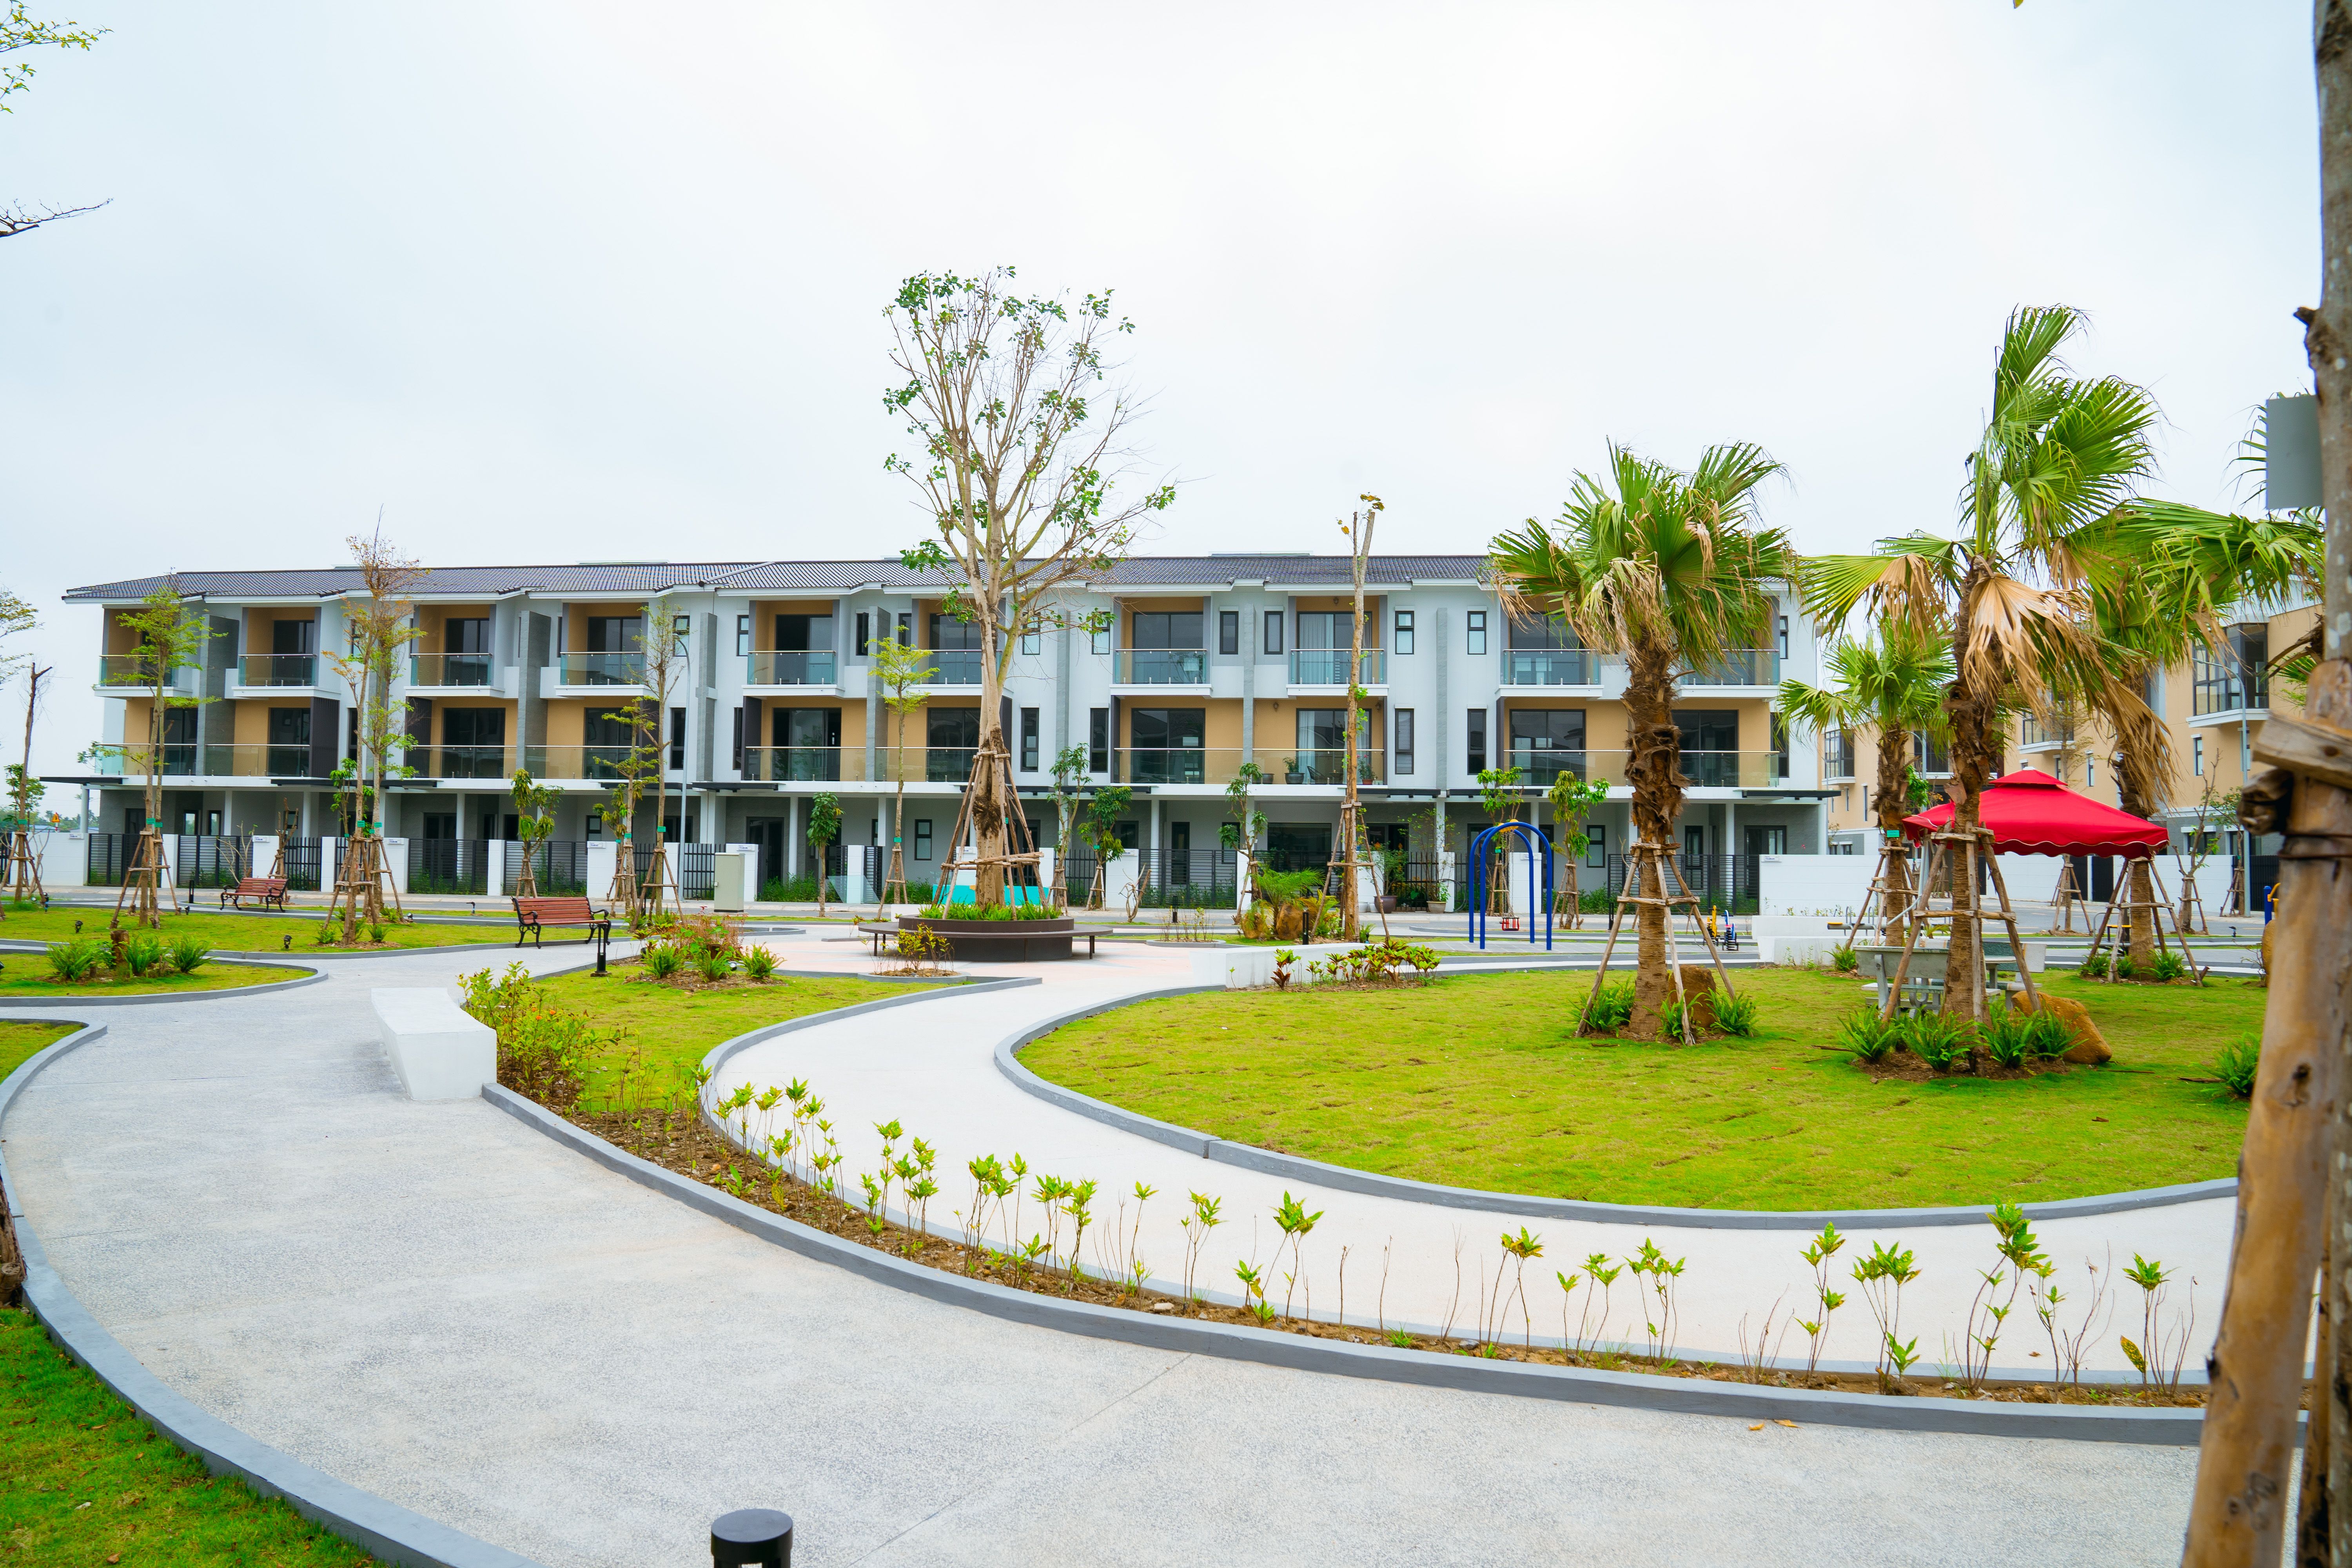 Belhomes VSIP Hai Phong - 44 units terrace house